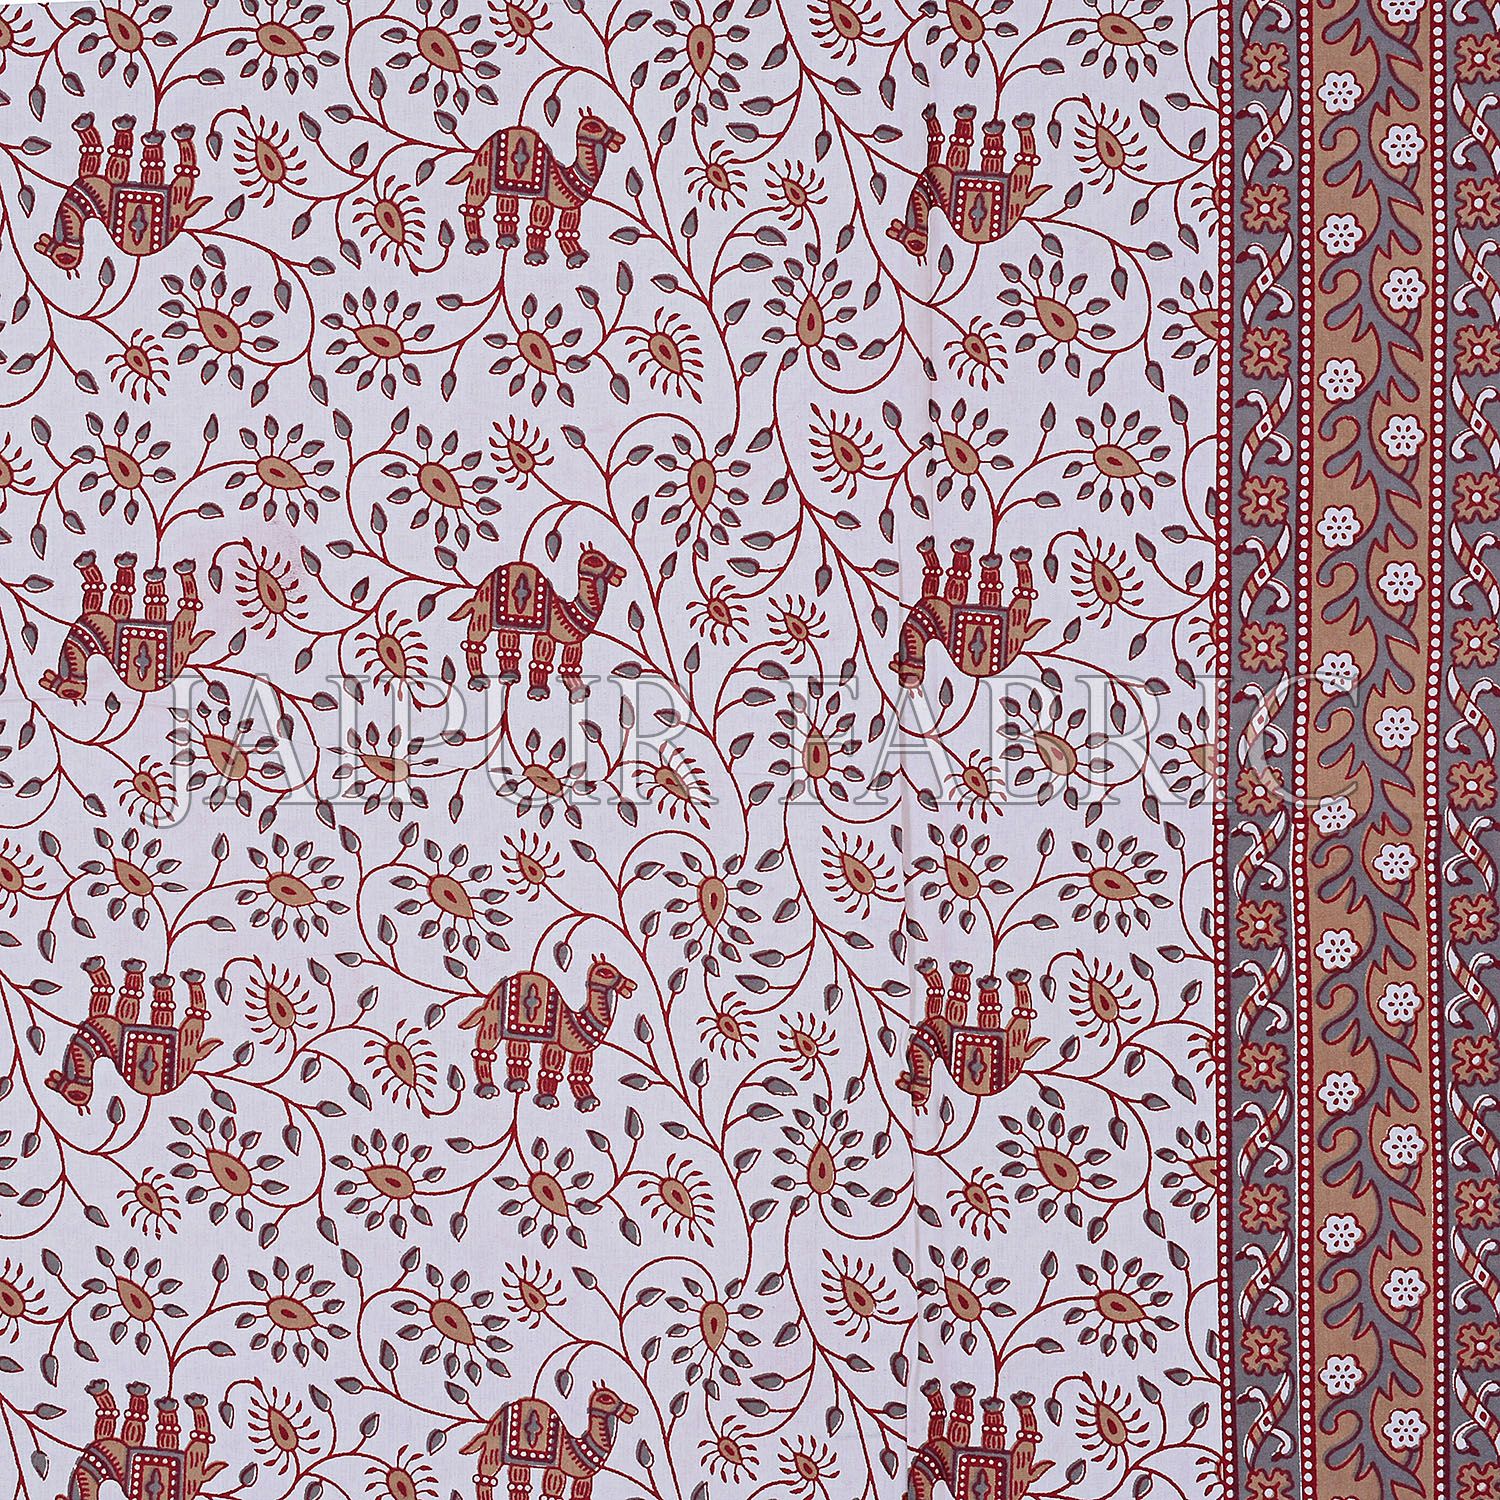 Khaki Base Jaipuri Camel Printed Cotton Double Bed Sheet